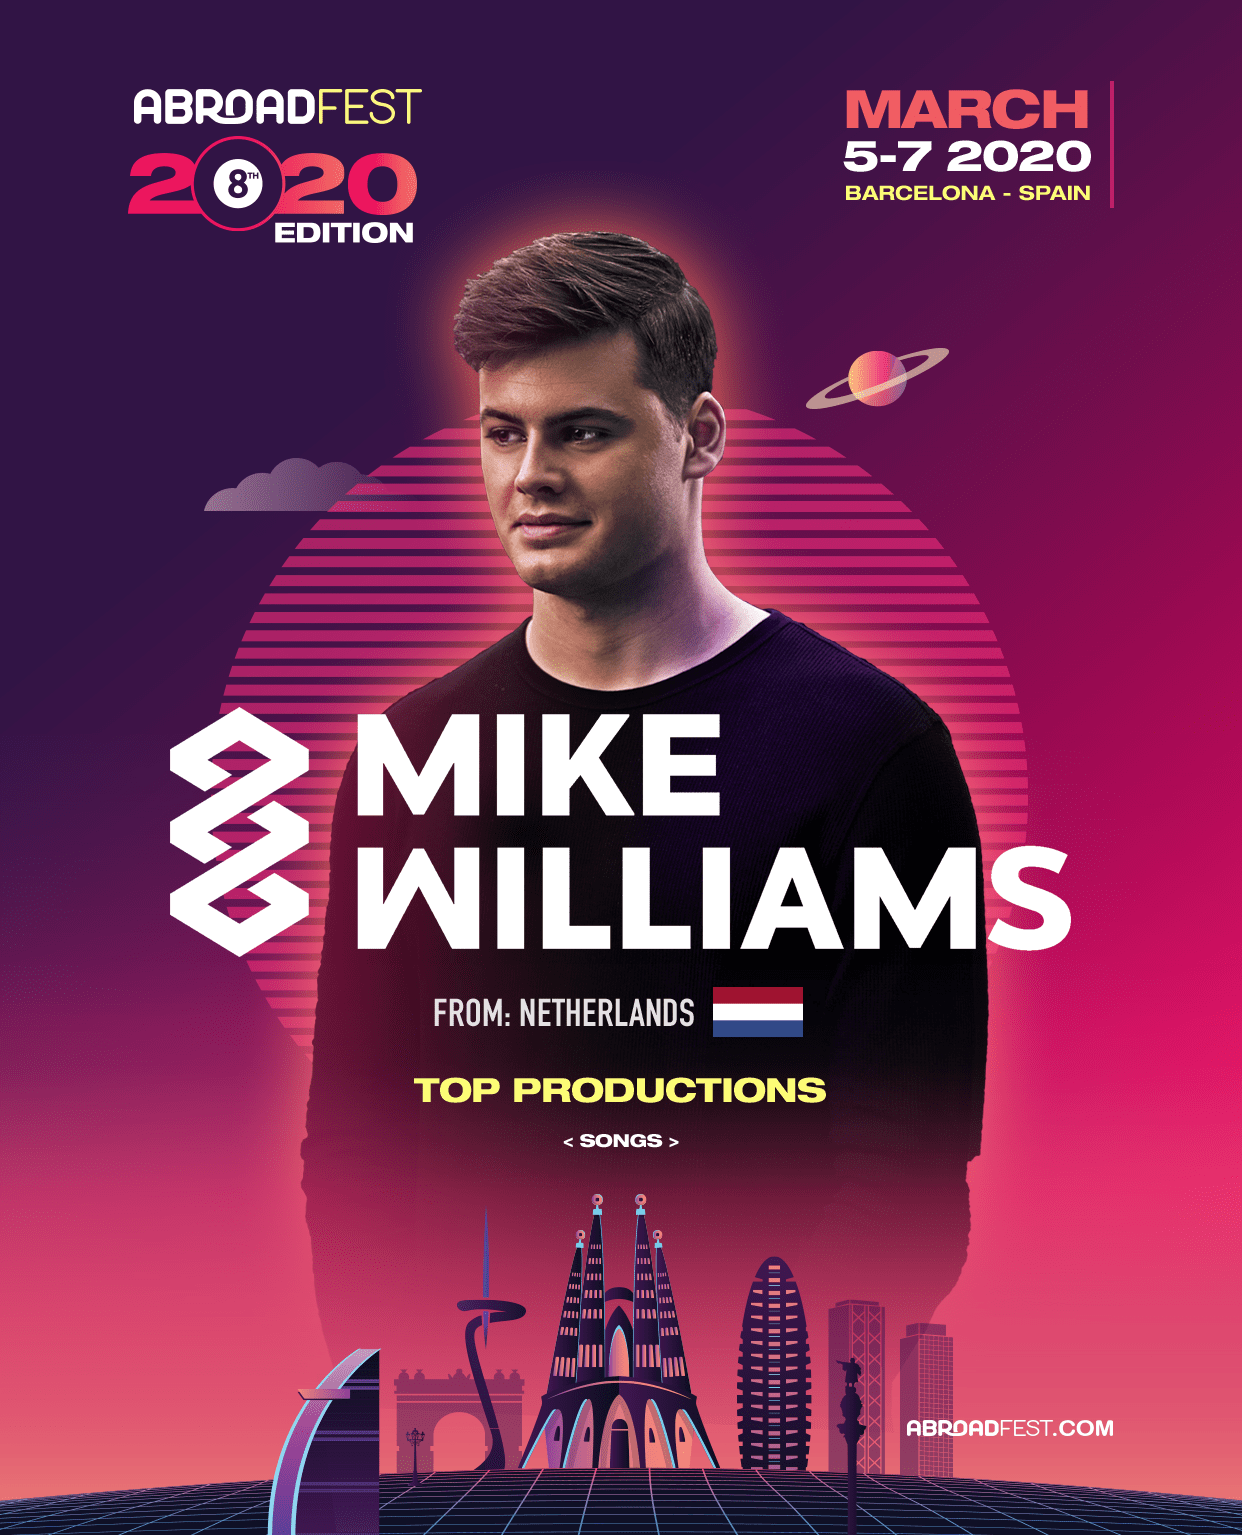 Mike Williams, la nueva apuesta de AbroadFest 2020 | Wololo Sound